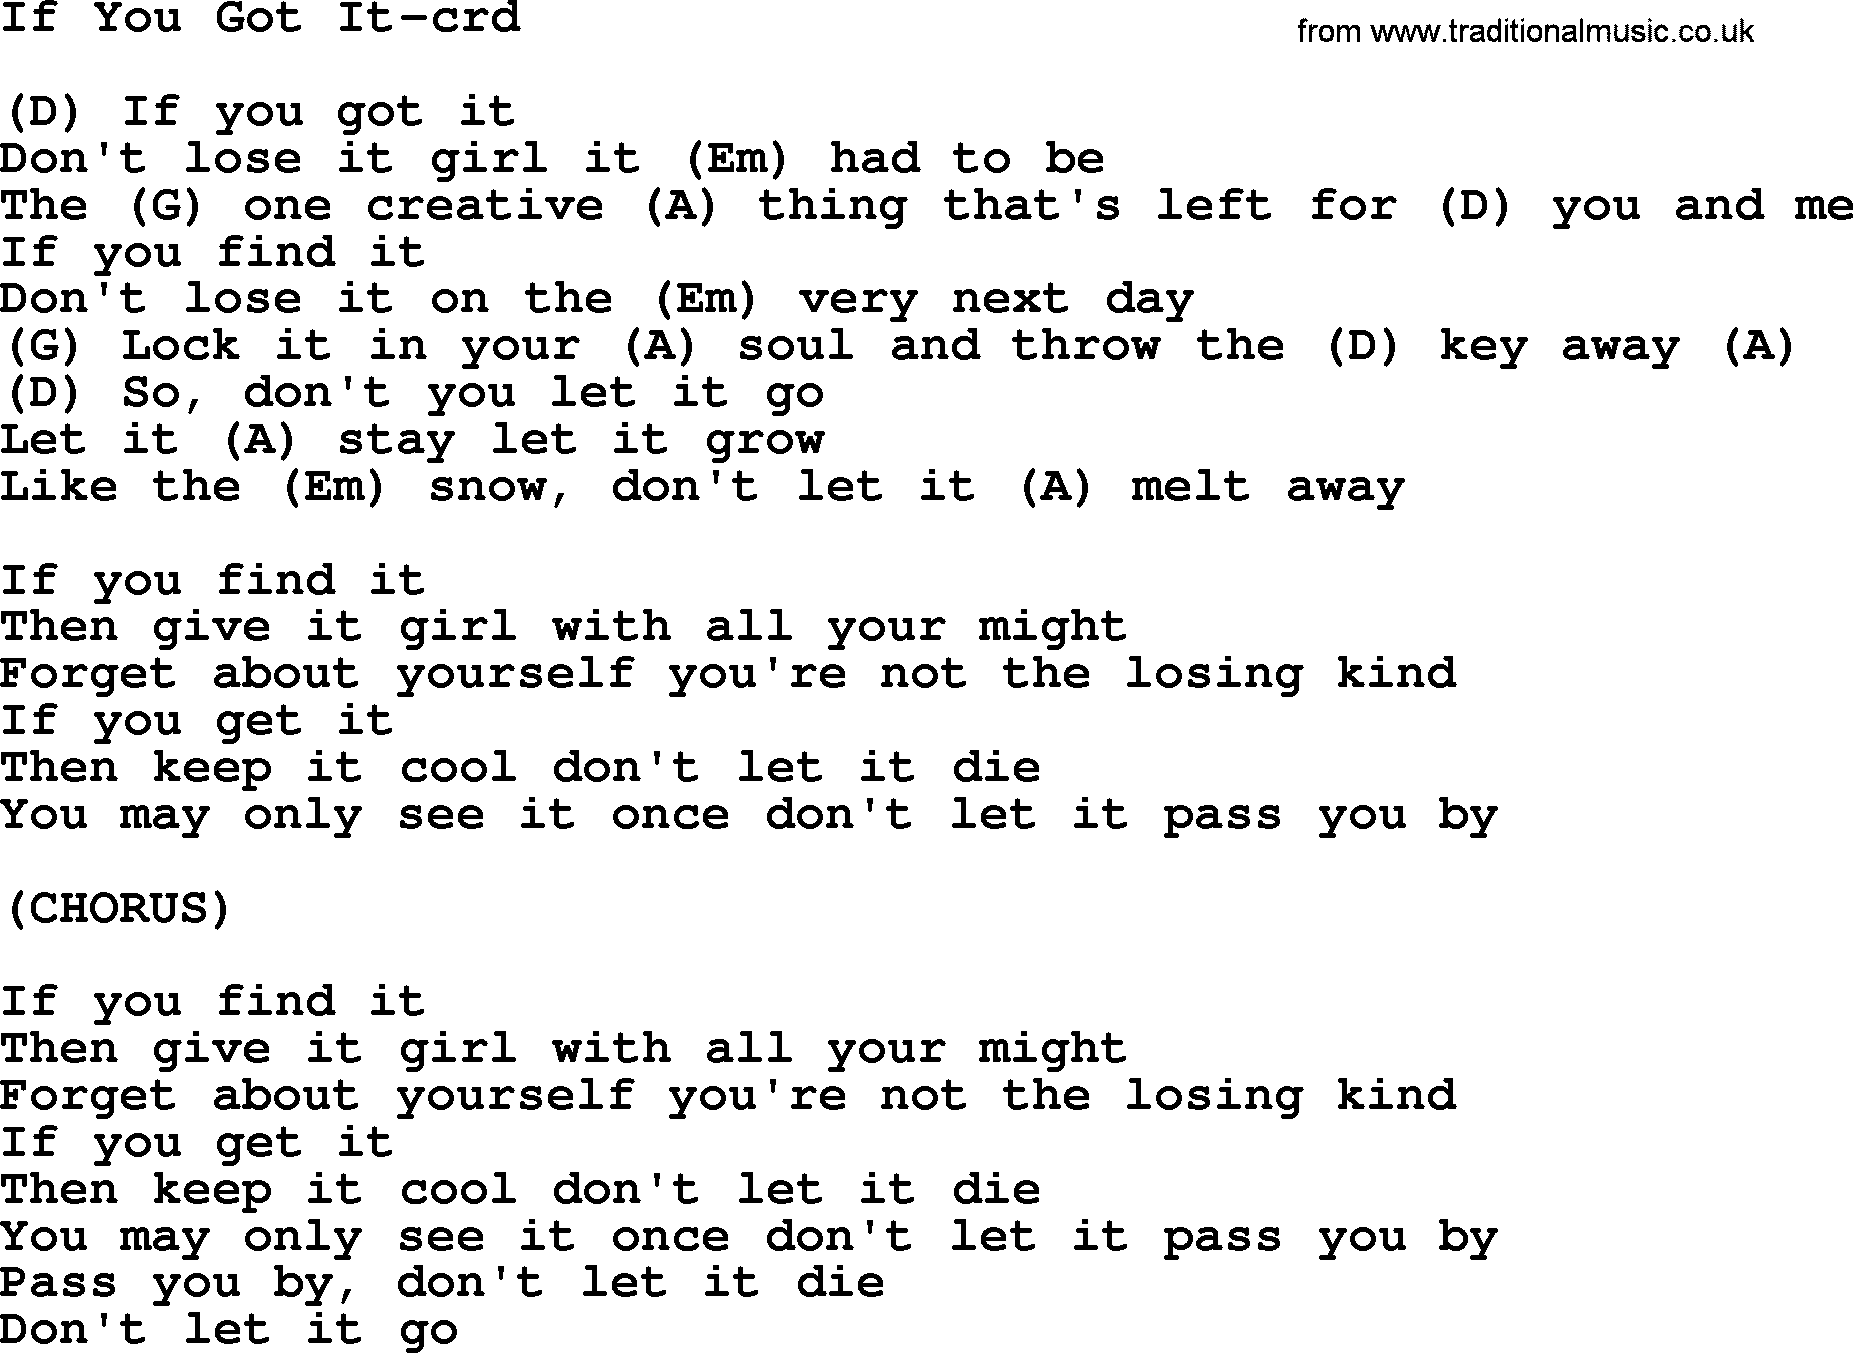 Gordon Lightfoot song If You Got It, lyrics and chords